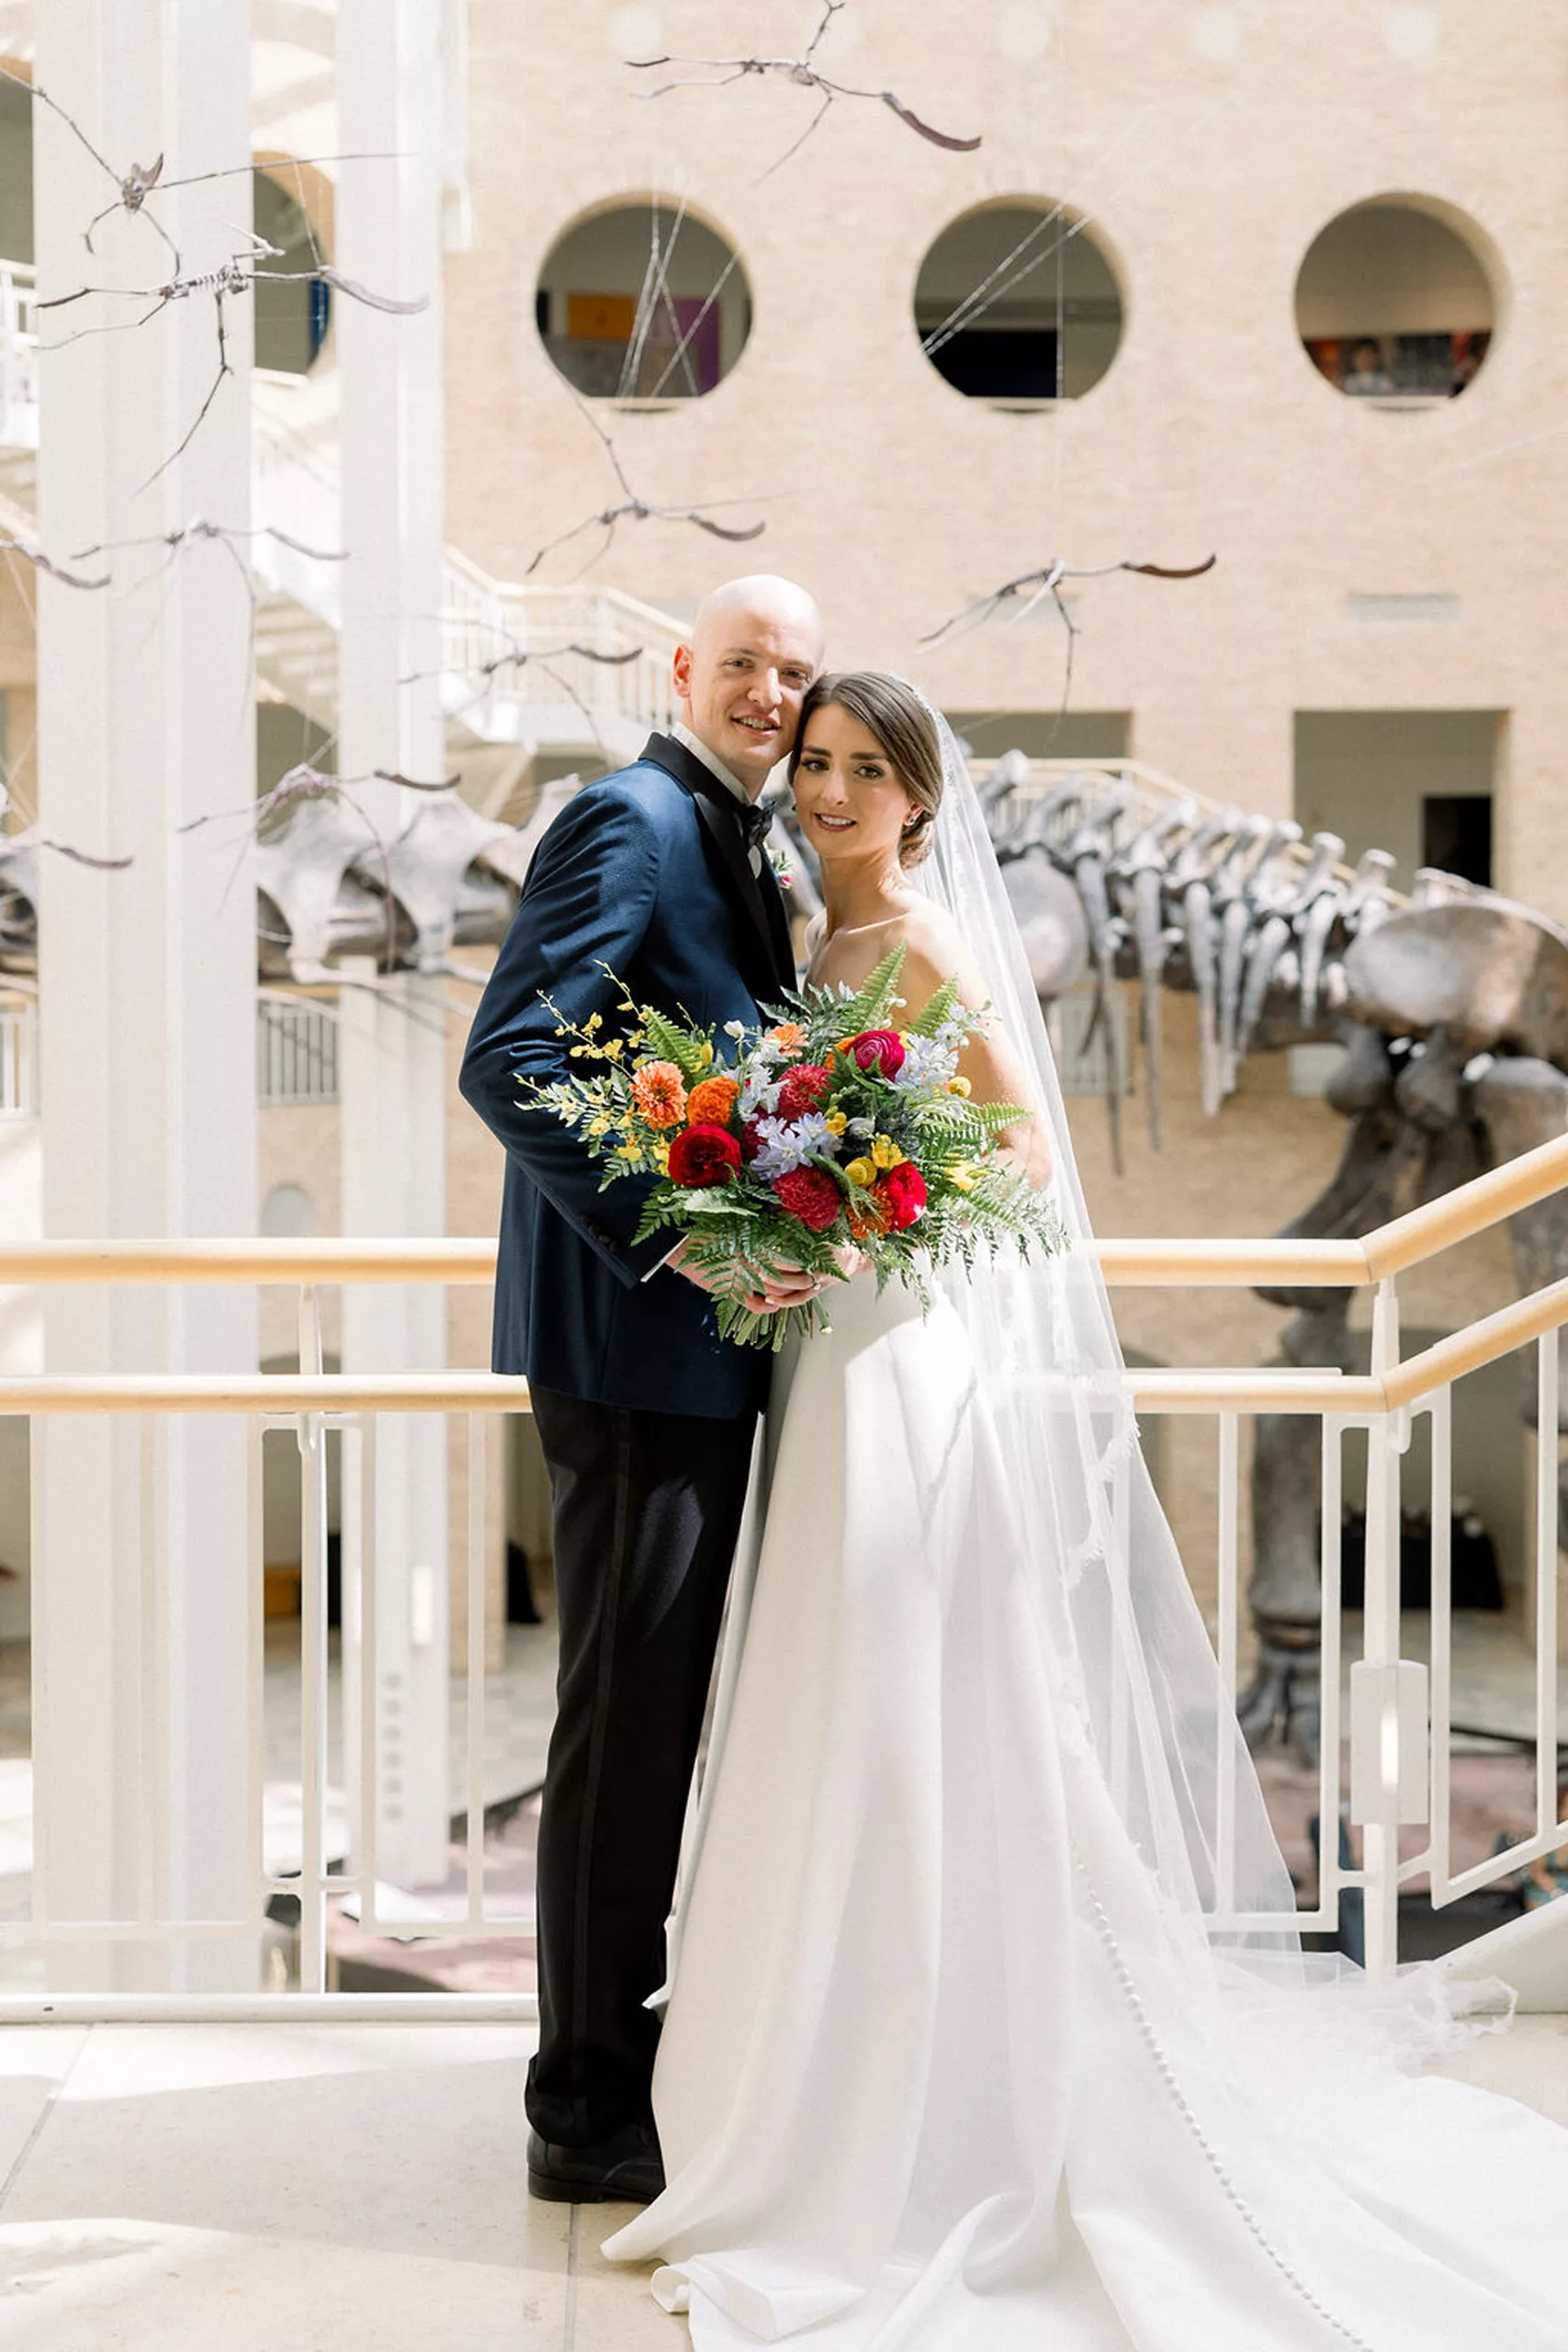 Newlyweds stand cheek to cheek under a flock of flying dinosaur skeletons